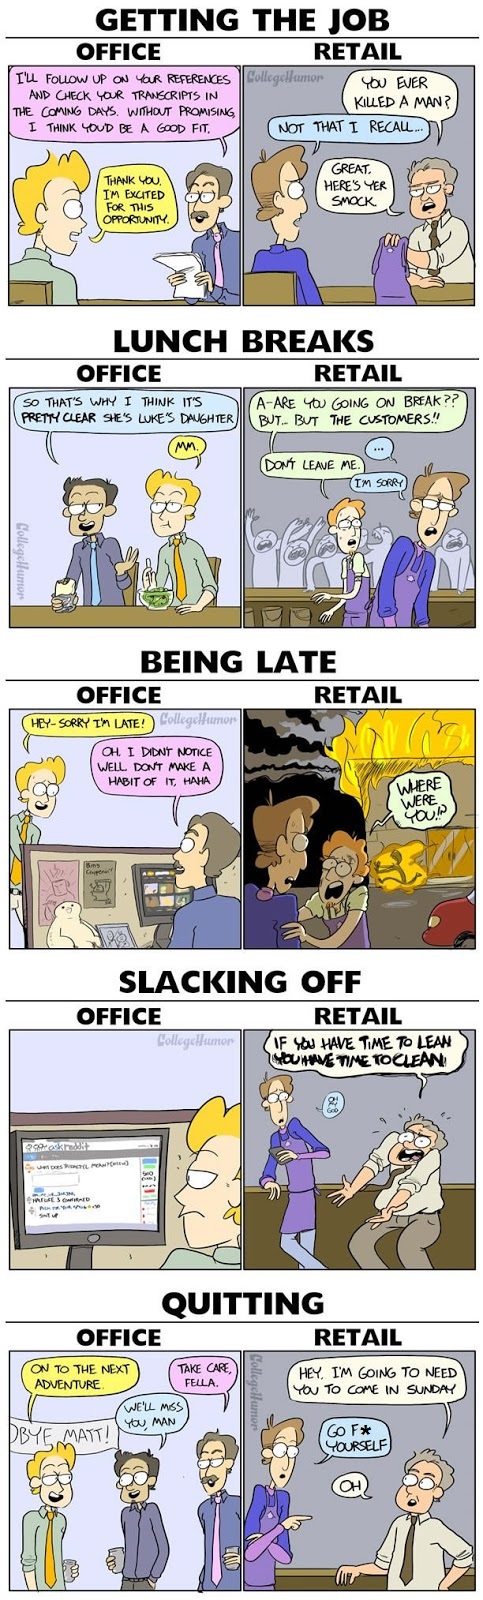 Office vs. Retail